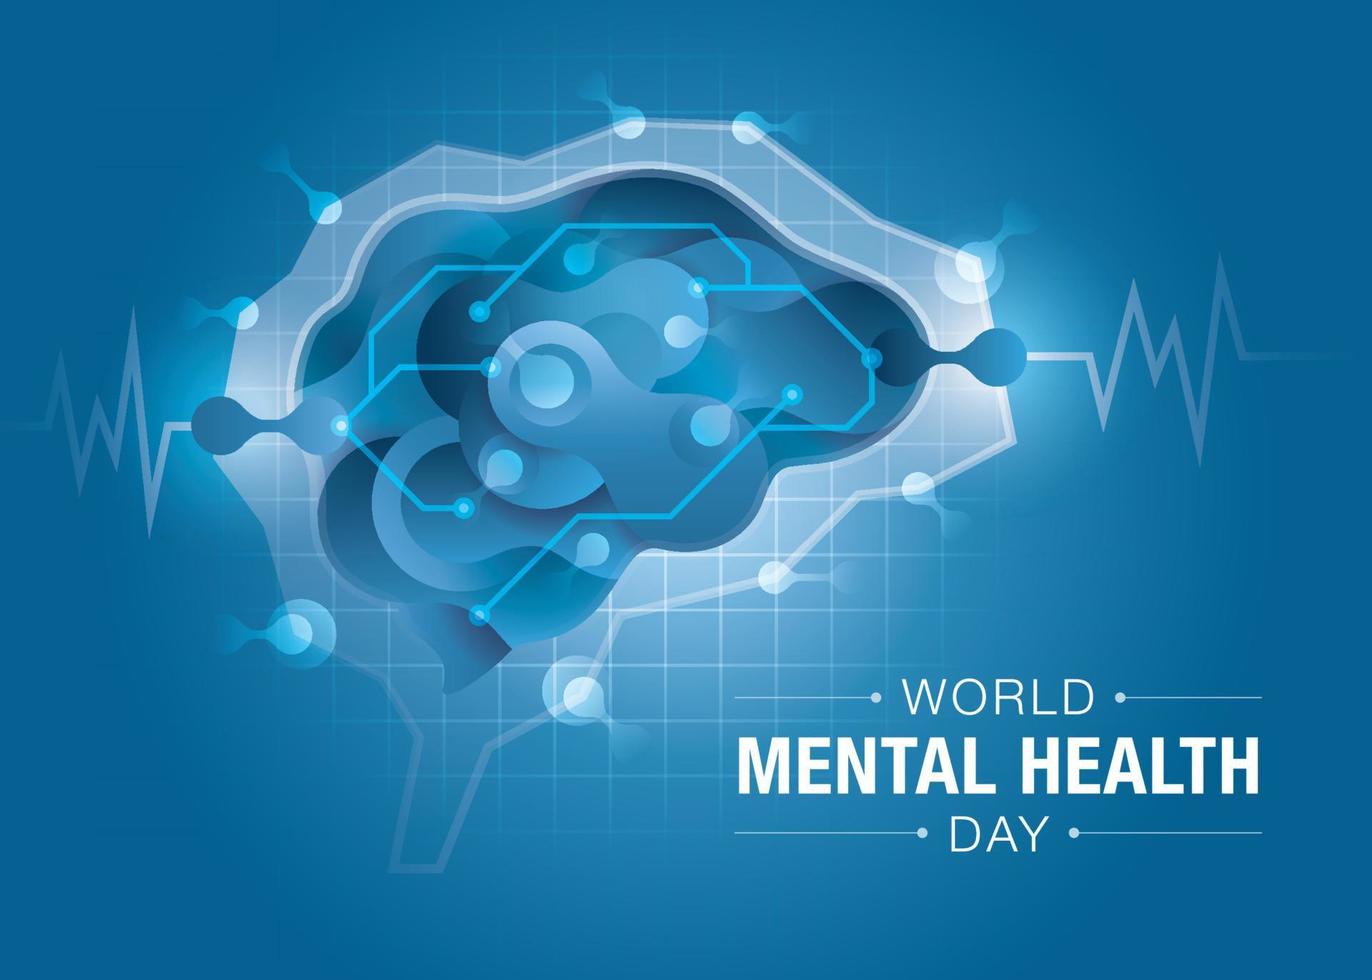 dia mundial da saúde mental, design cerebral de encefalografia, cérebro e saúde mental. vetor